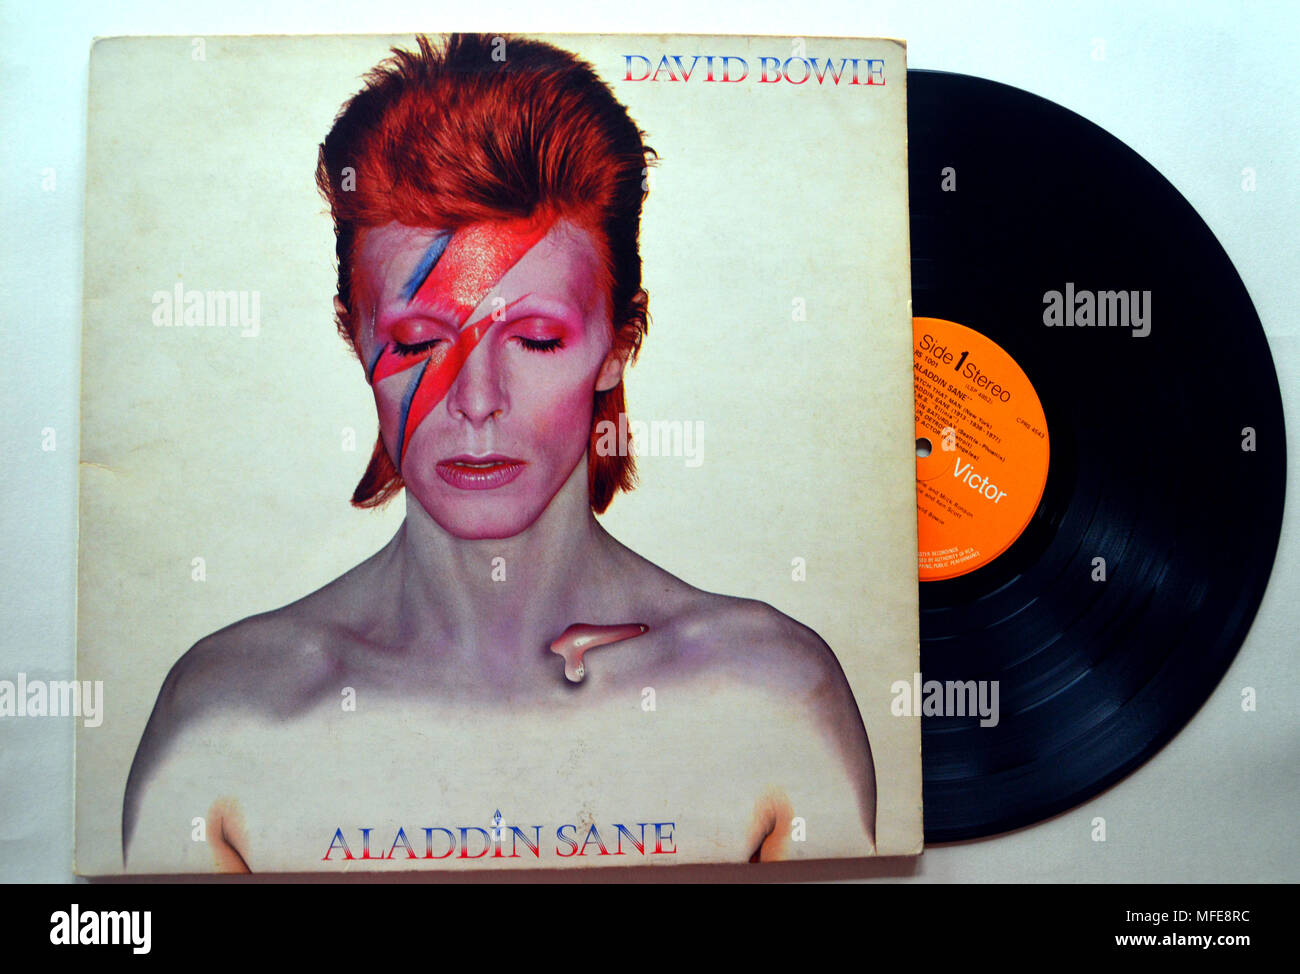 David Bowie's Aladdin Sane Album Sleeve Cover by RCA Records Stock Photo -  Alamy